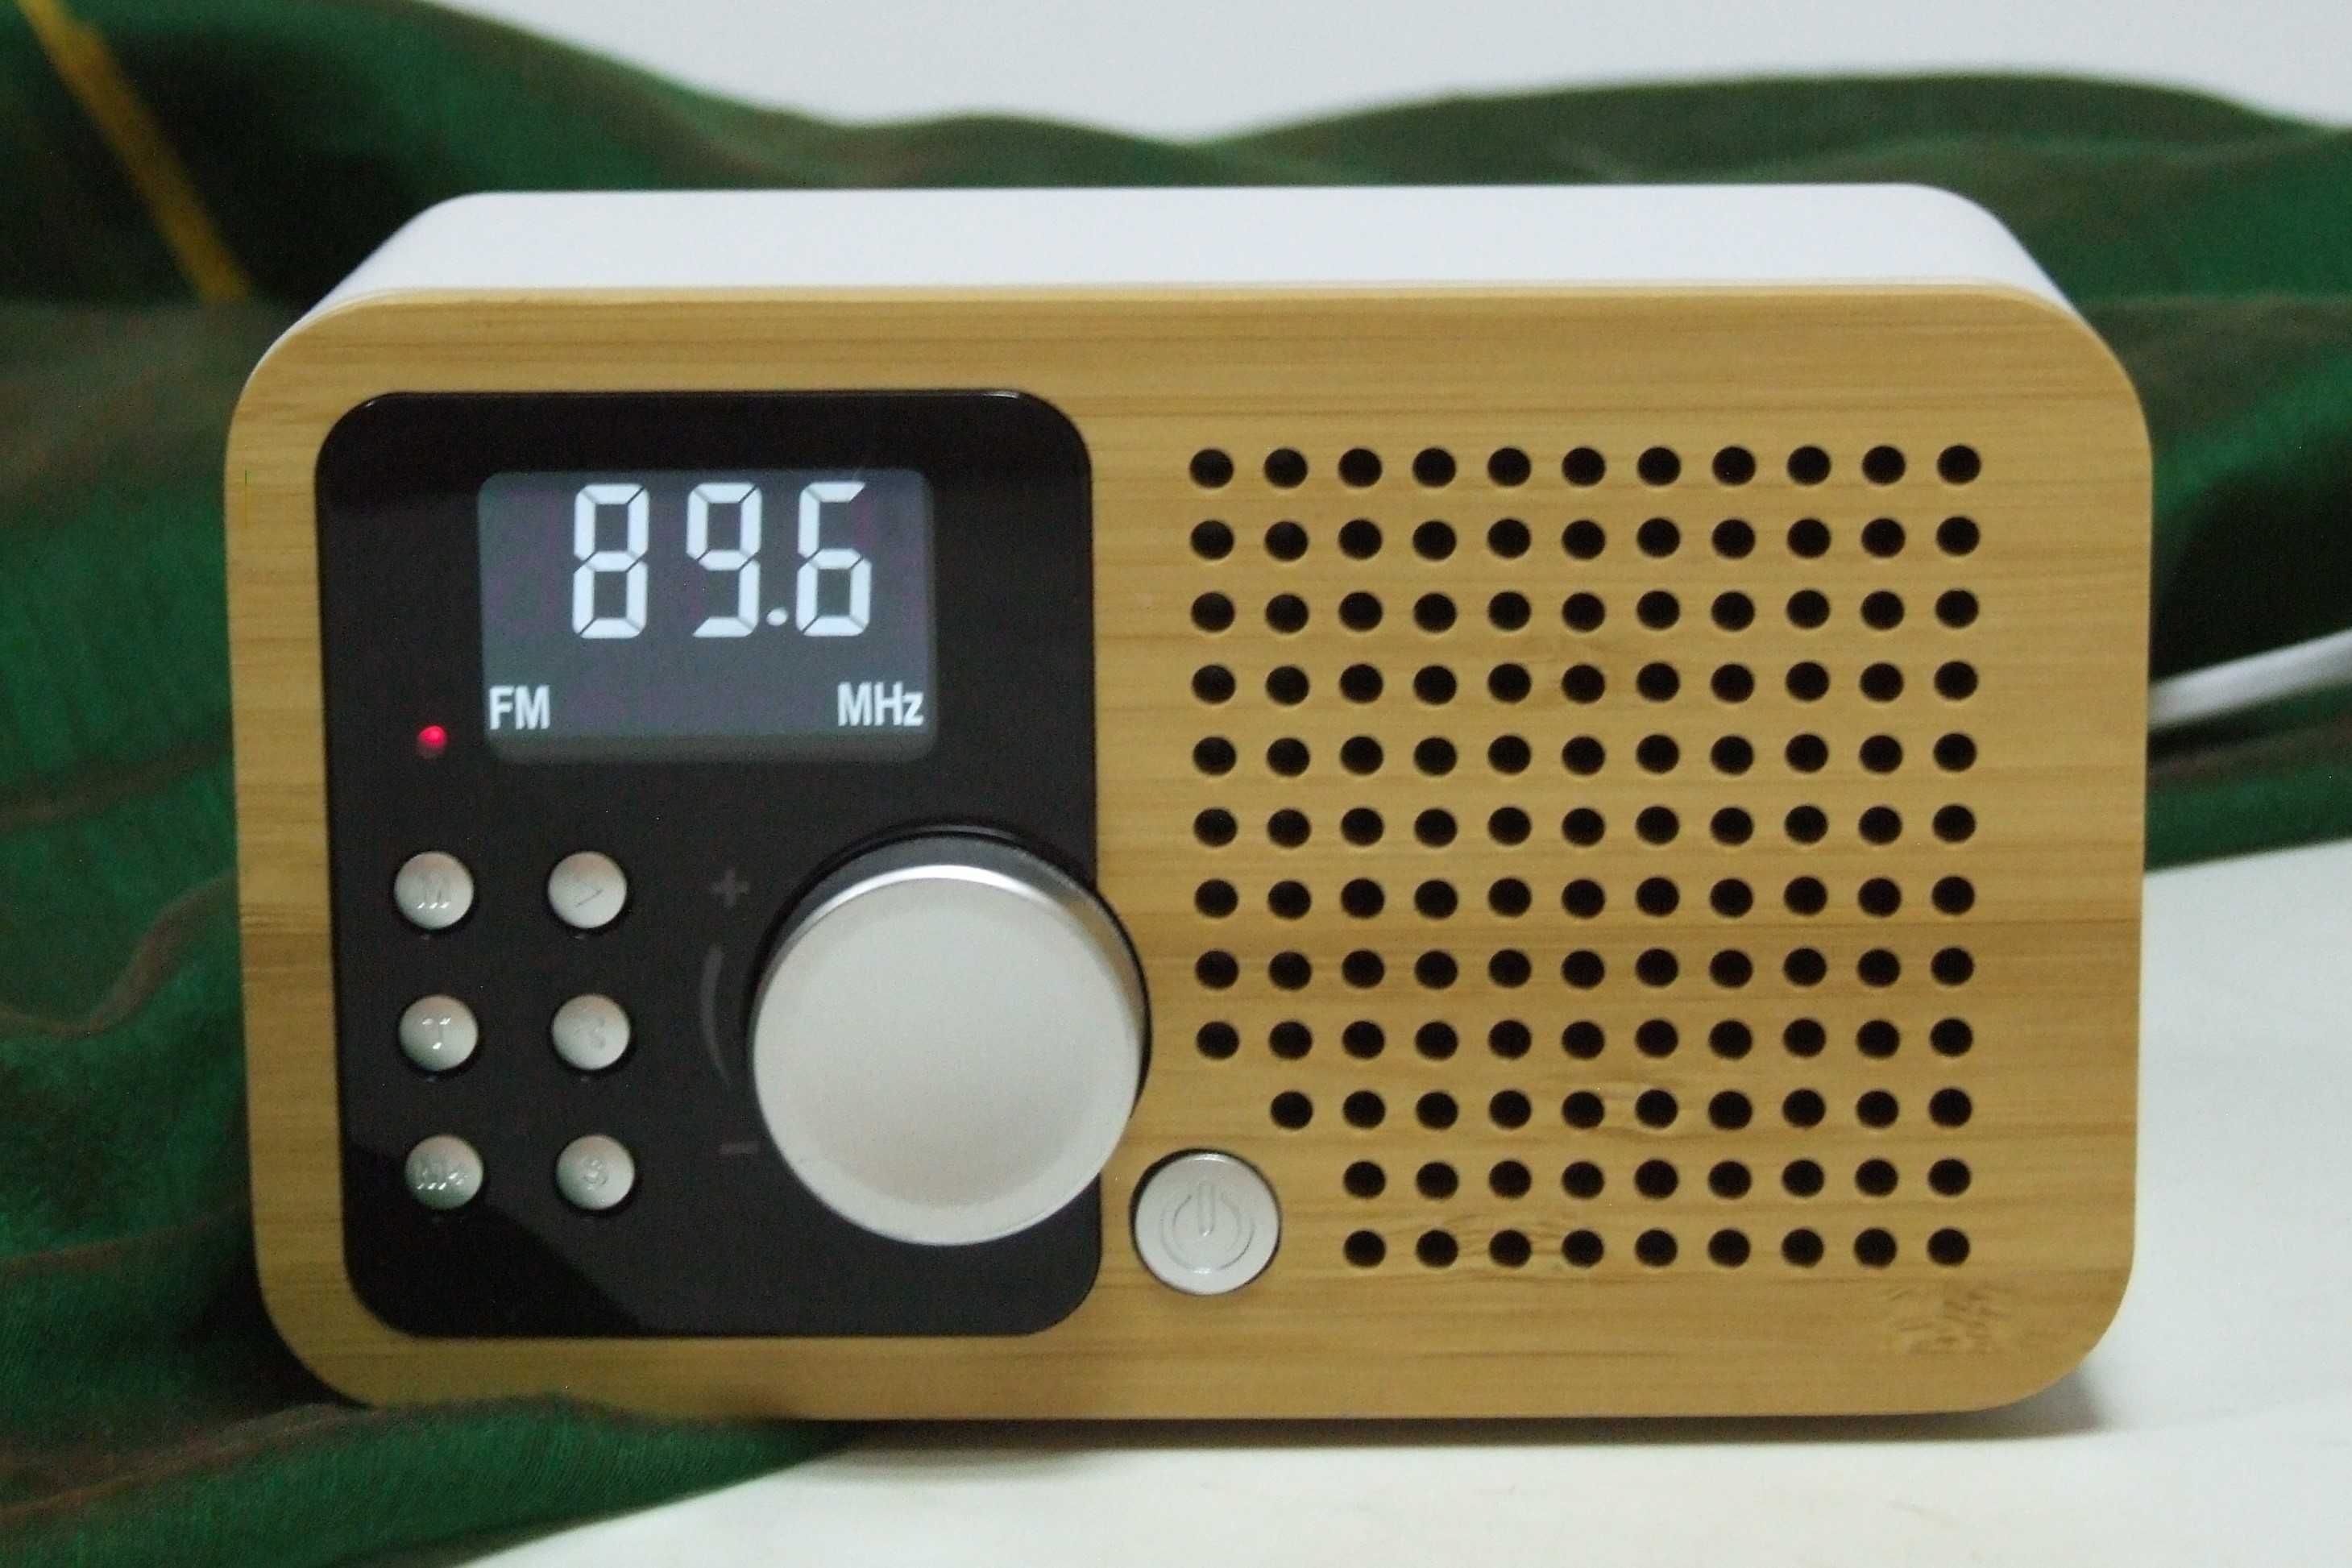 Radio Ceas TCM Tchibo, Made in Germany, 220 V si baterii, NOU